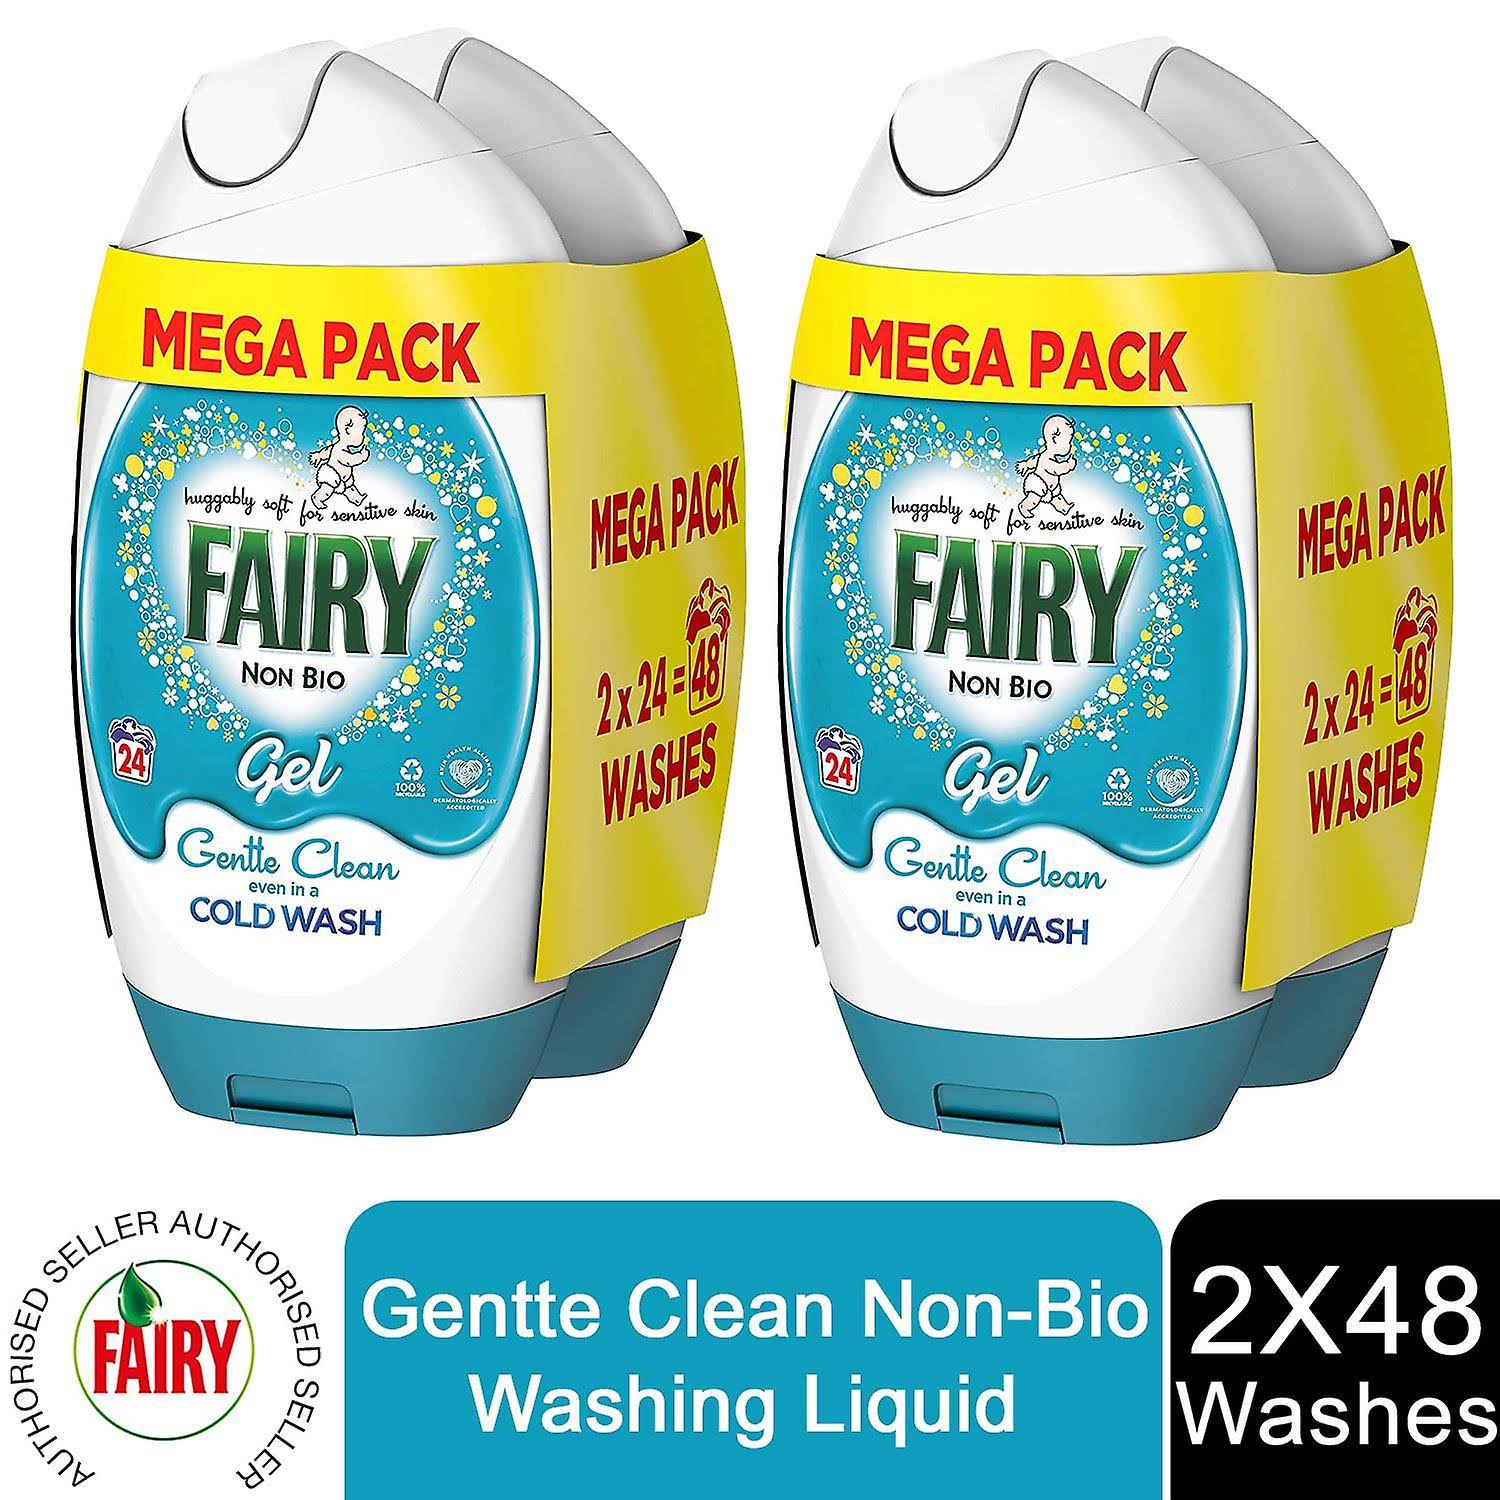 Fairy for Sensitive Skin Formula Non Bio Washing Gel, 48 Washes, Pack of 2